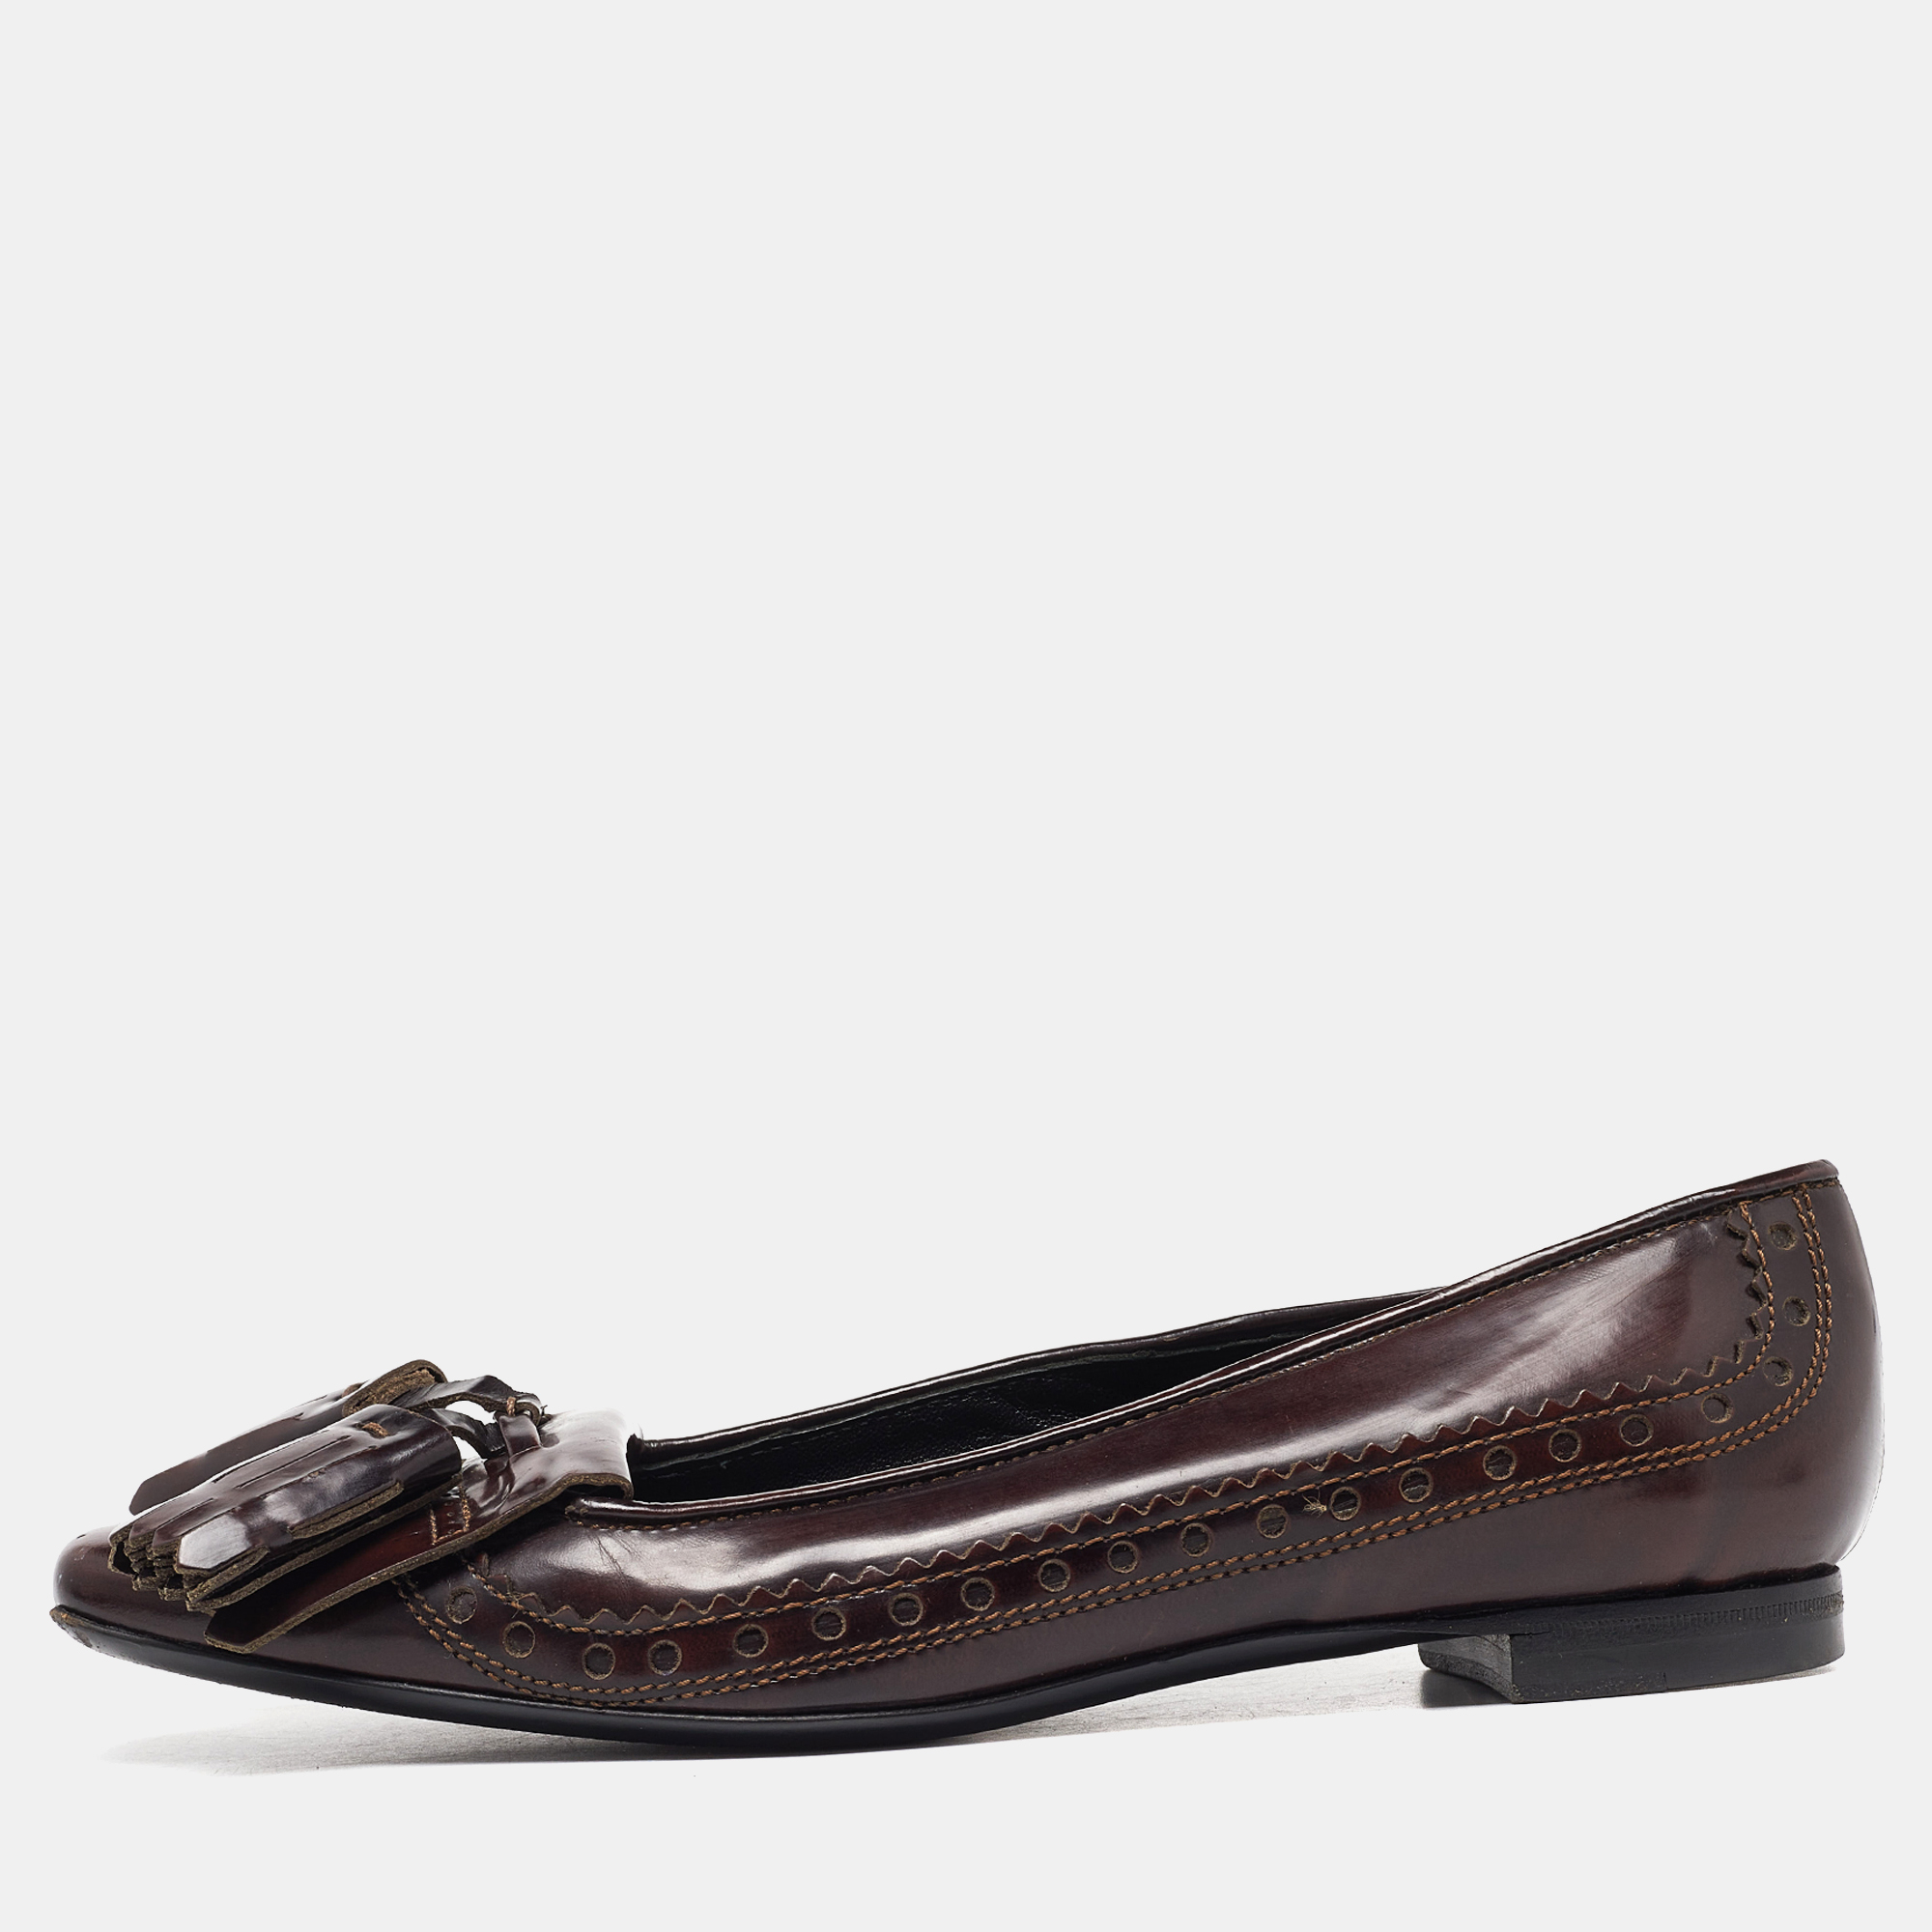 Burberry burgundy brogue leather tassel fringe details loafers size 38